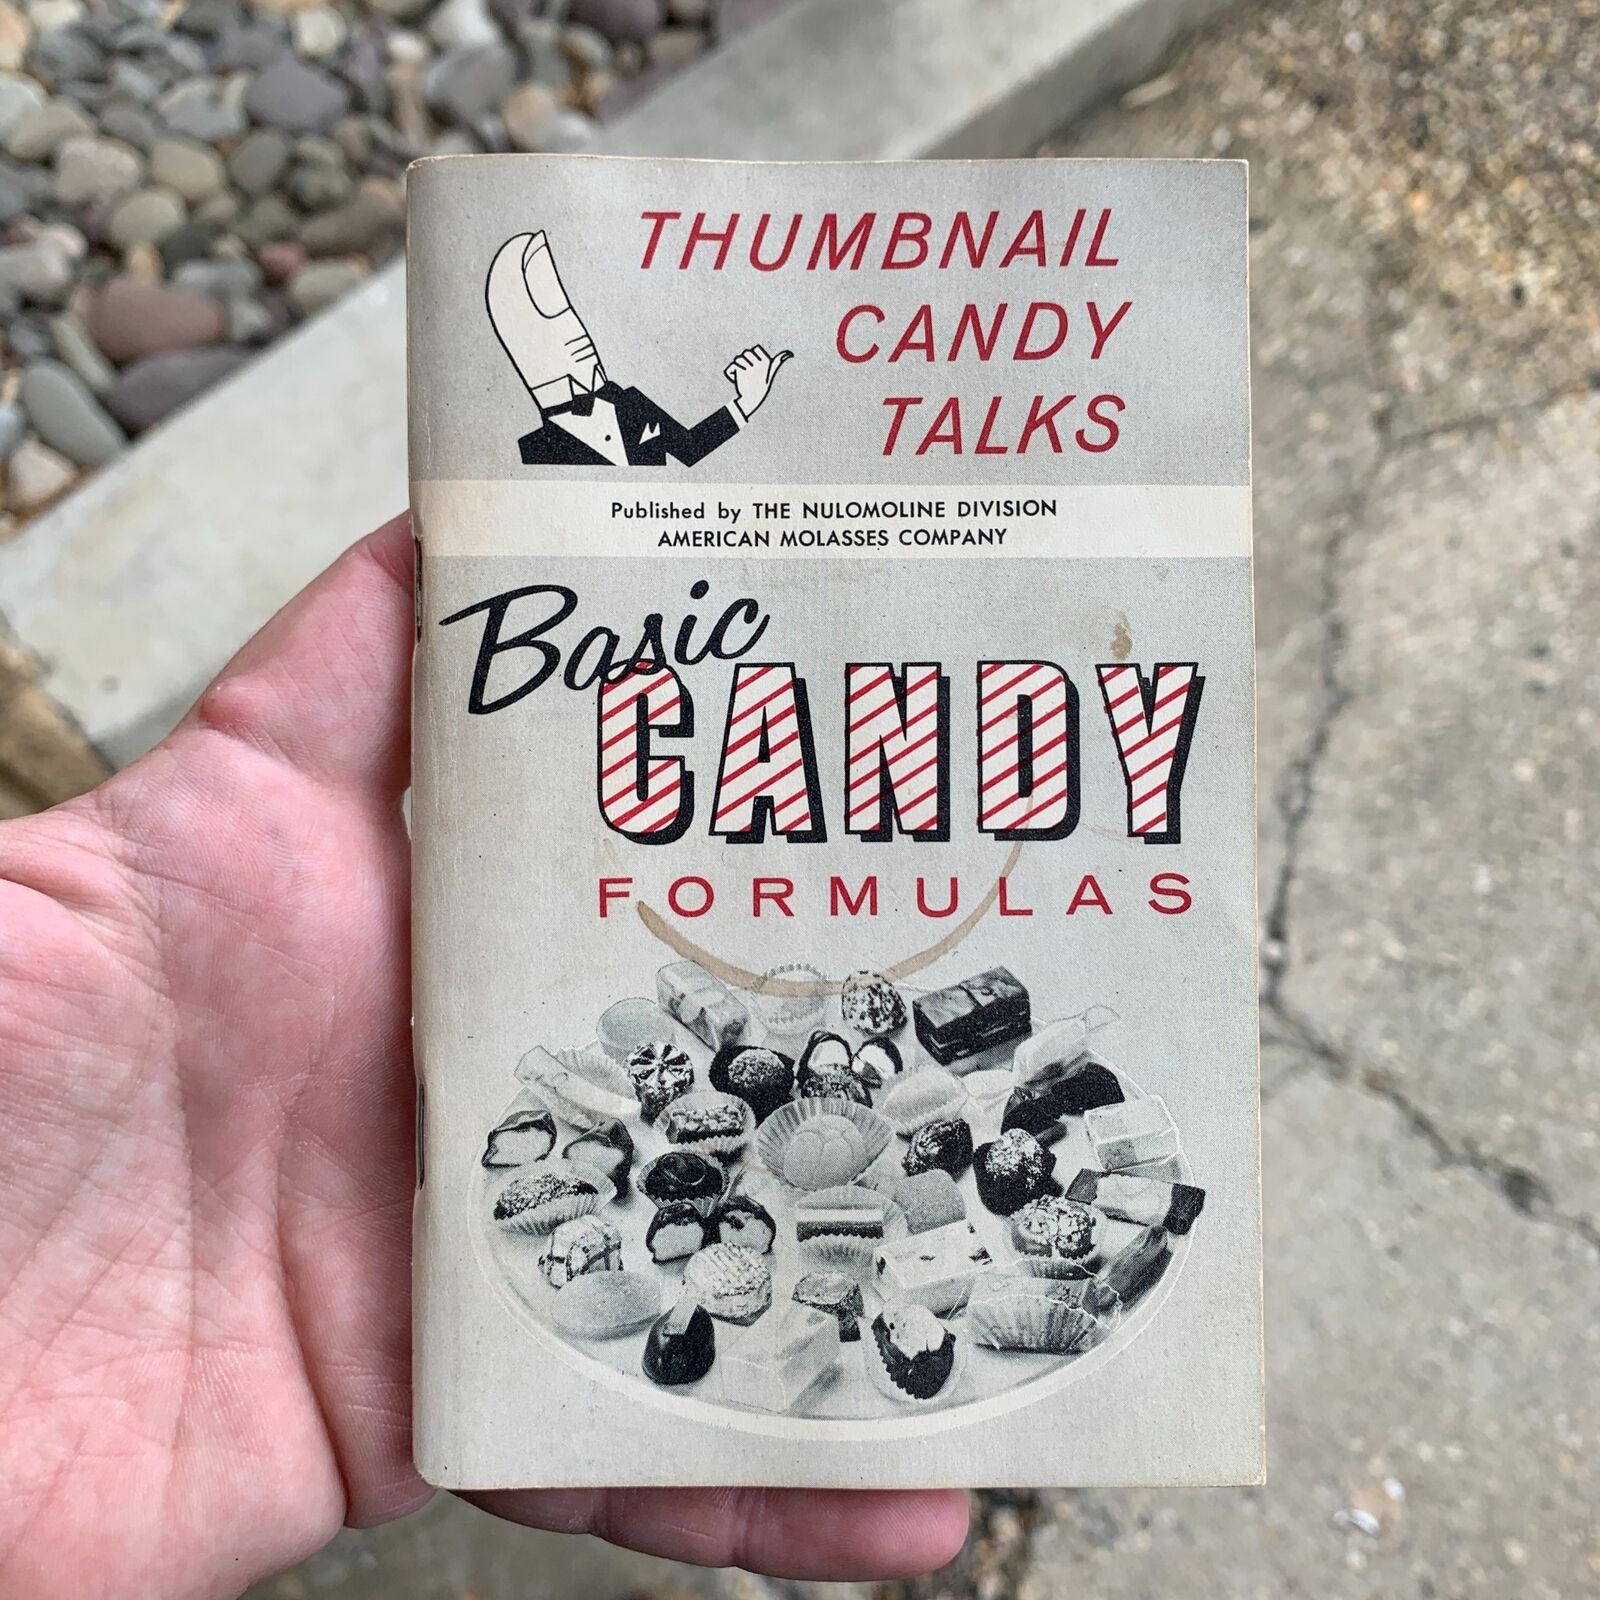 Vtg THUMBNAIL CANDY TALKS Basic Candy Formulas 1959 Nulomoline Advertising